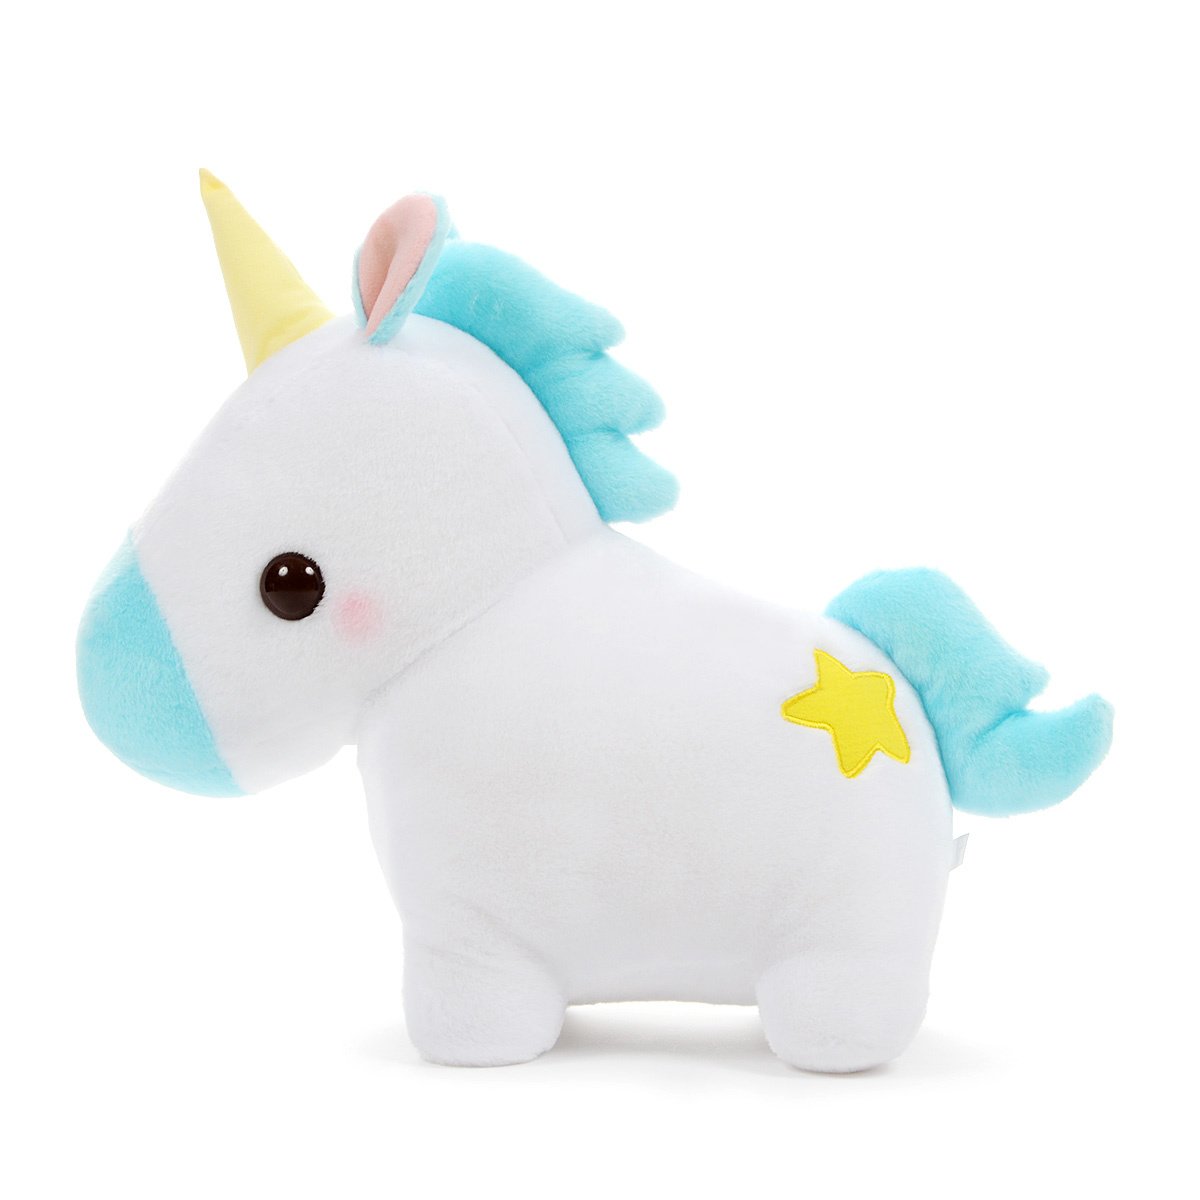 unicorn plush bag